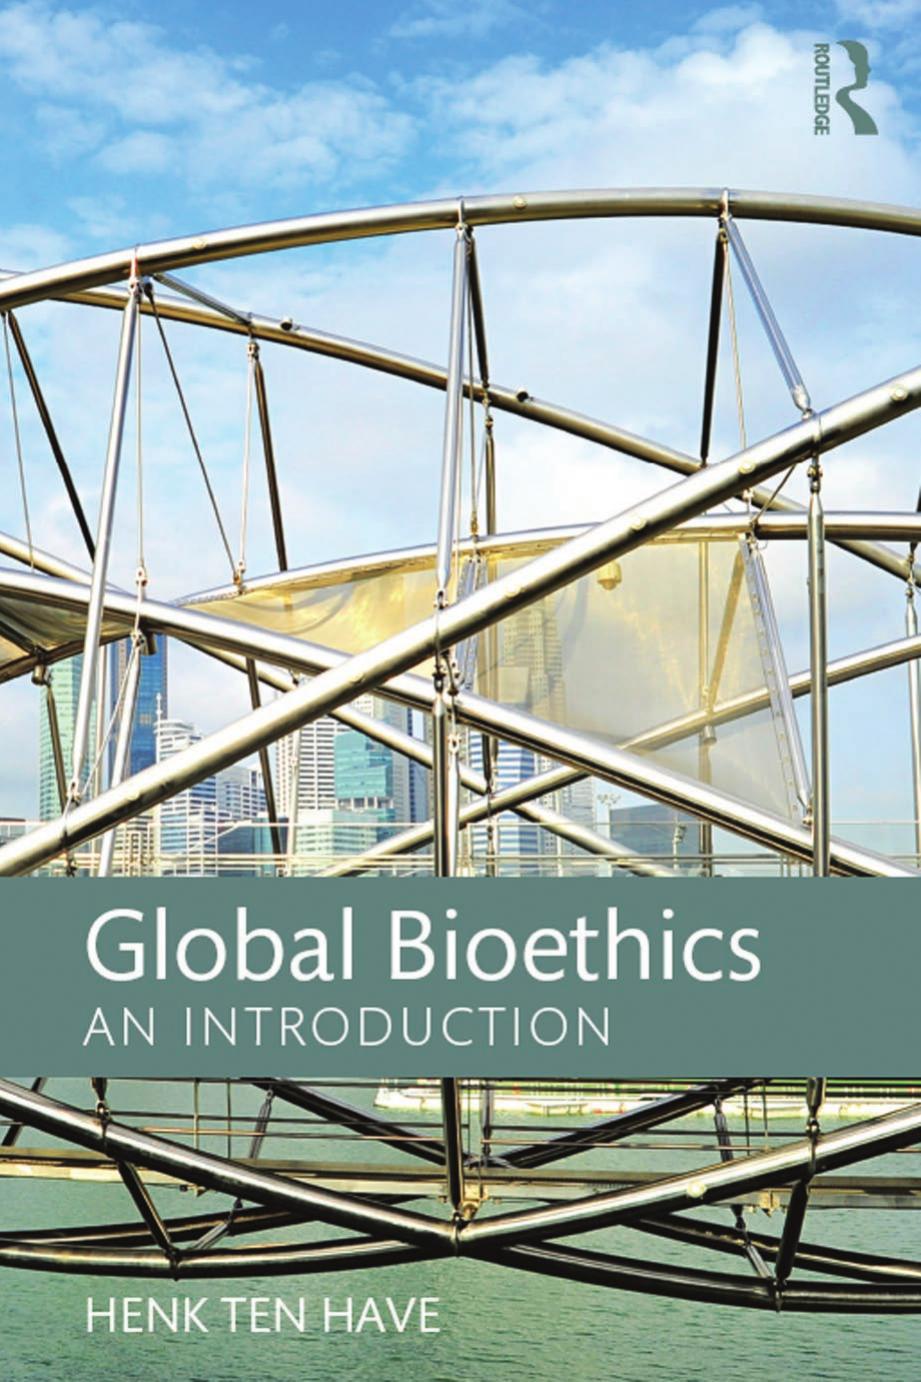 Global Bioethics: An Introduction